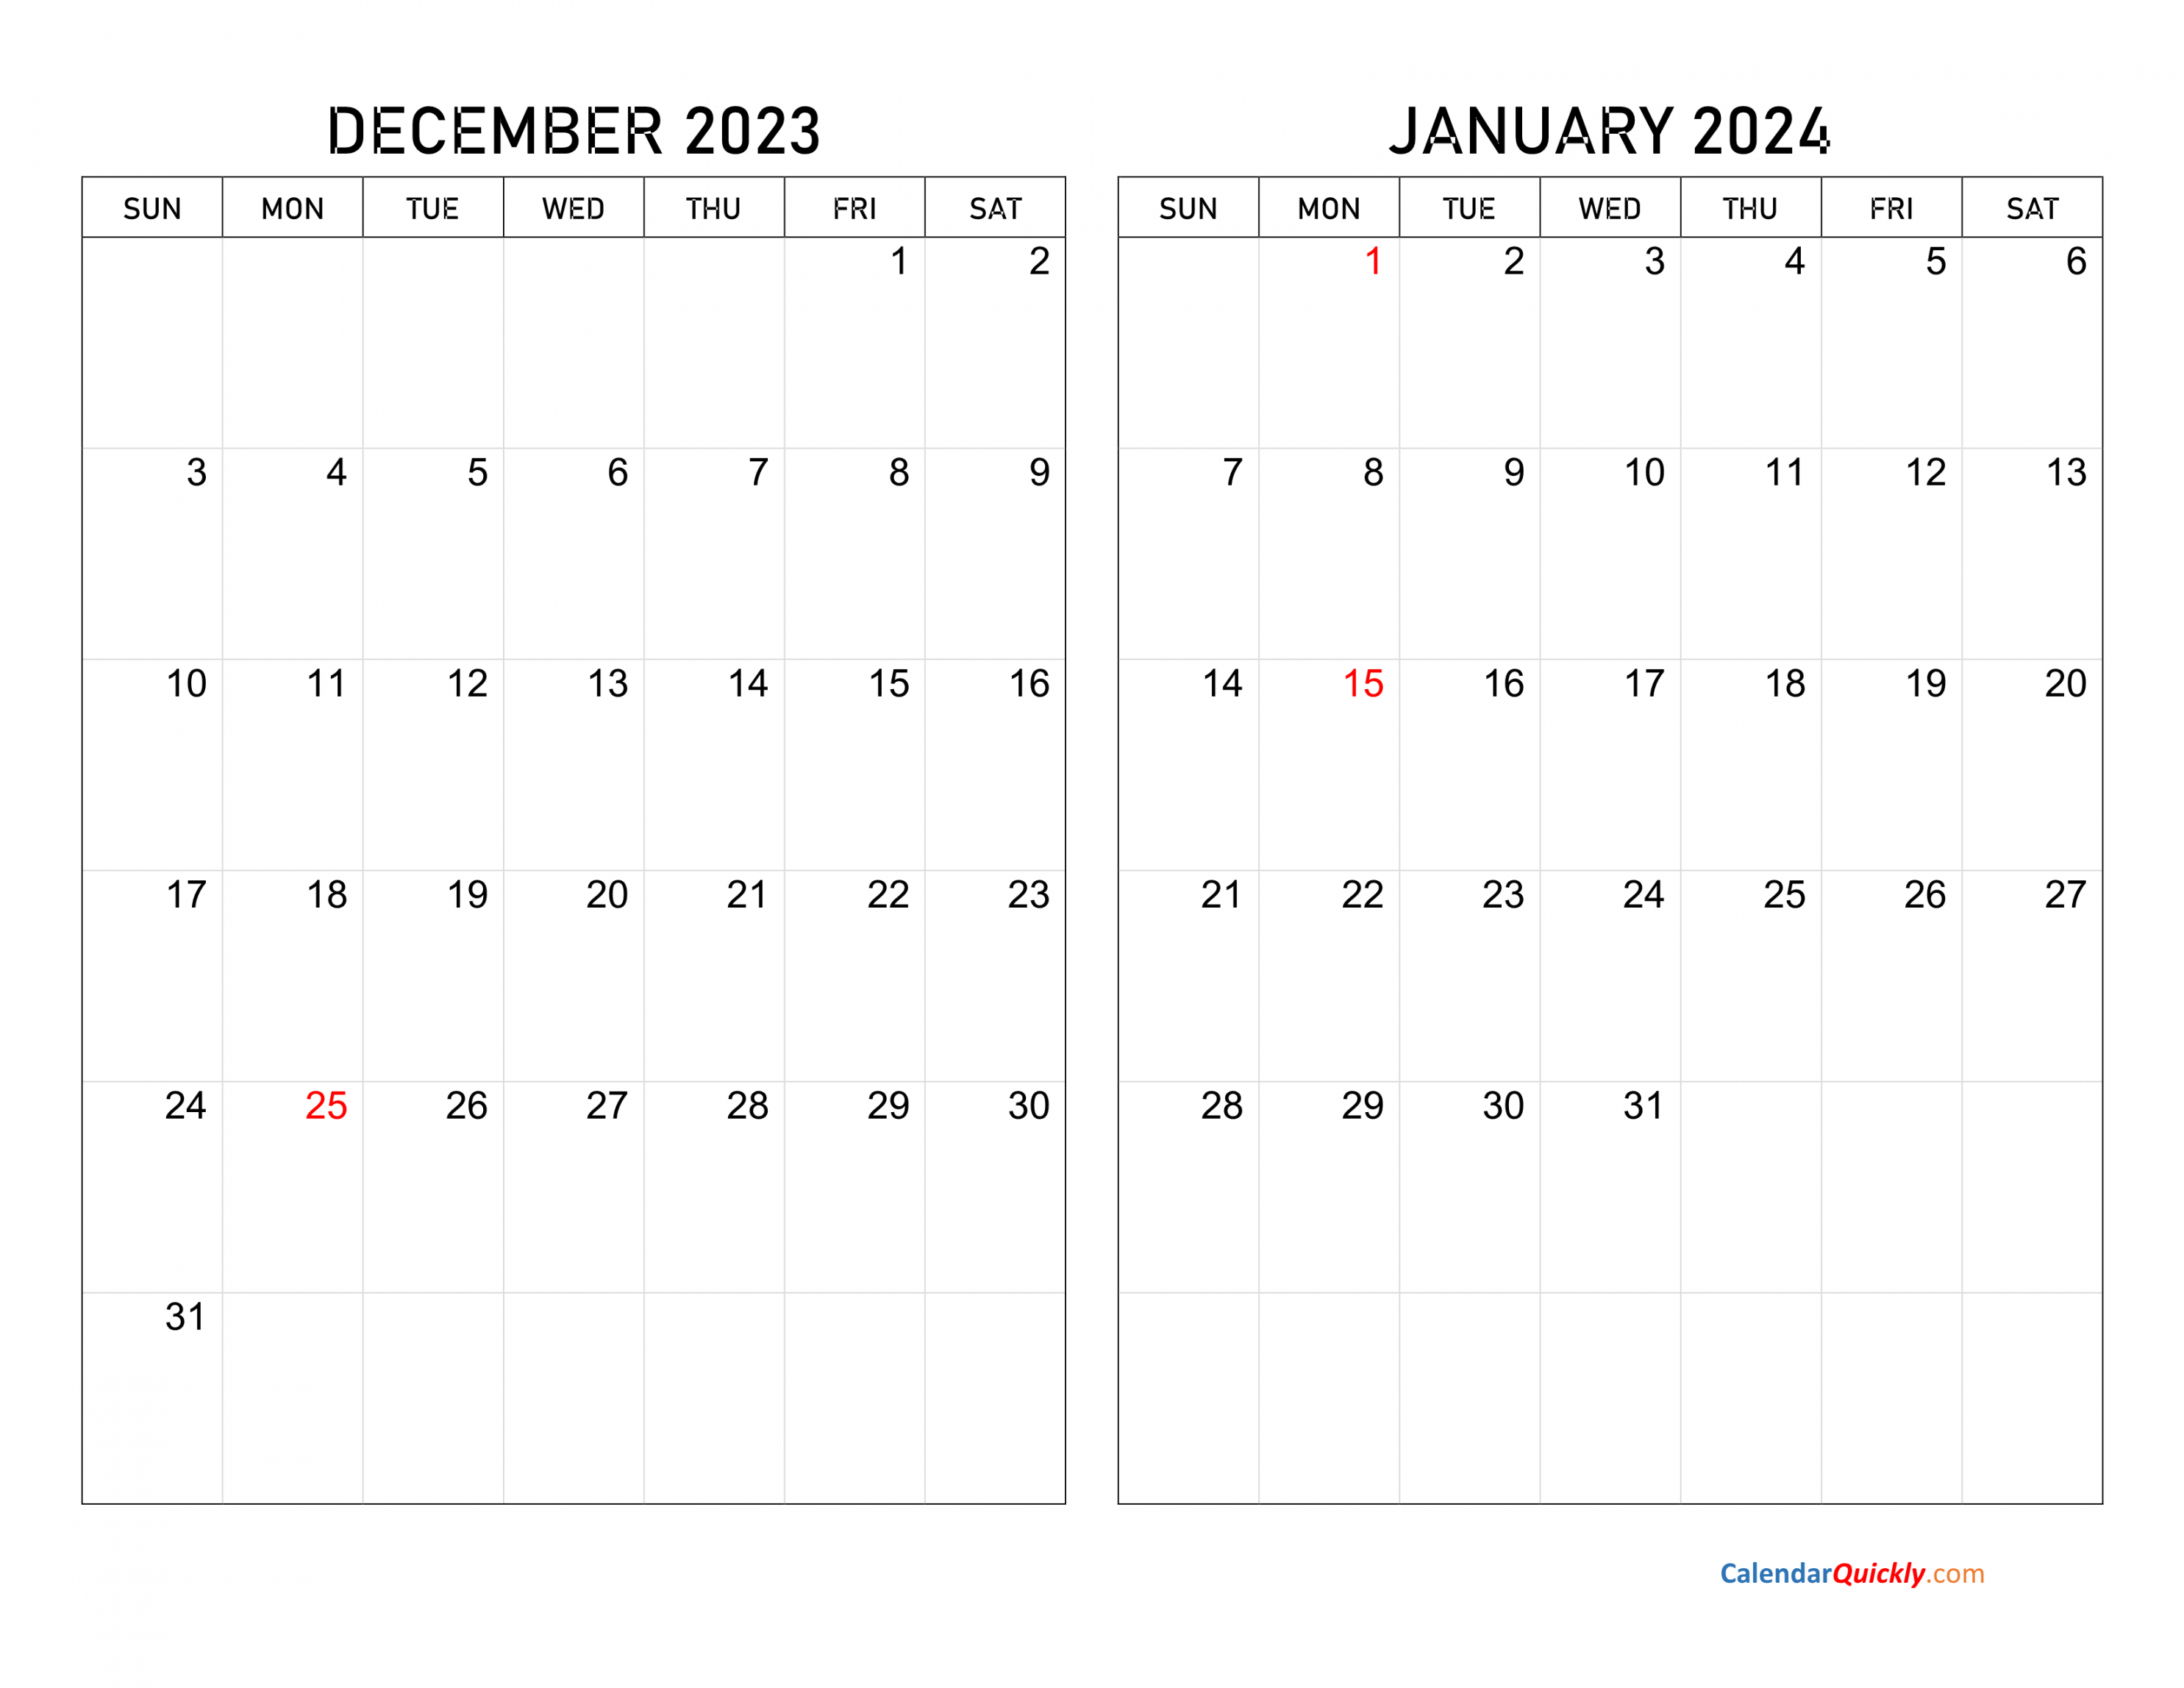 December and January Calendar Calendar Quickly